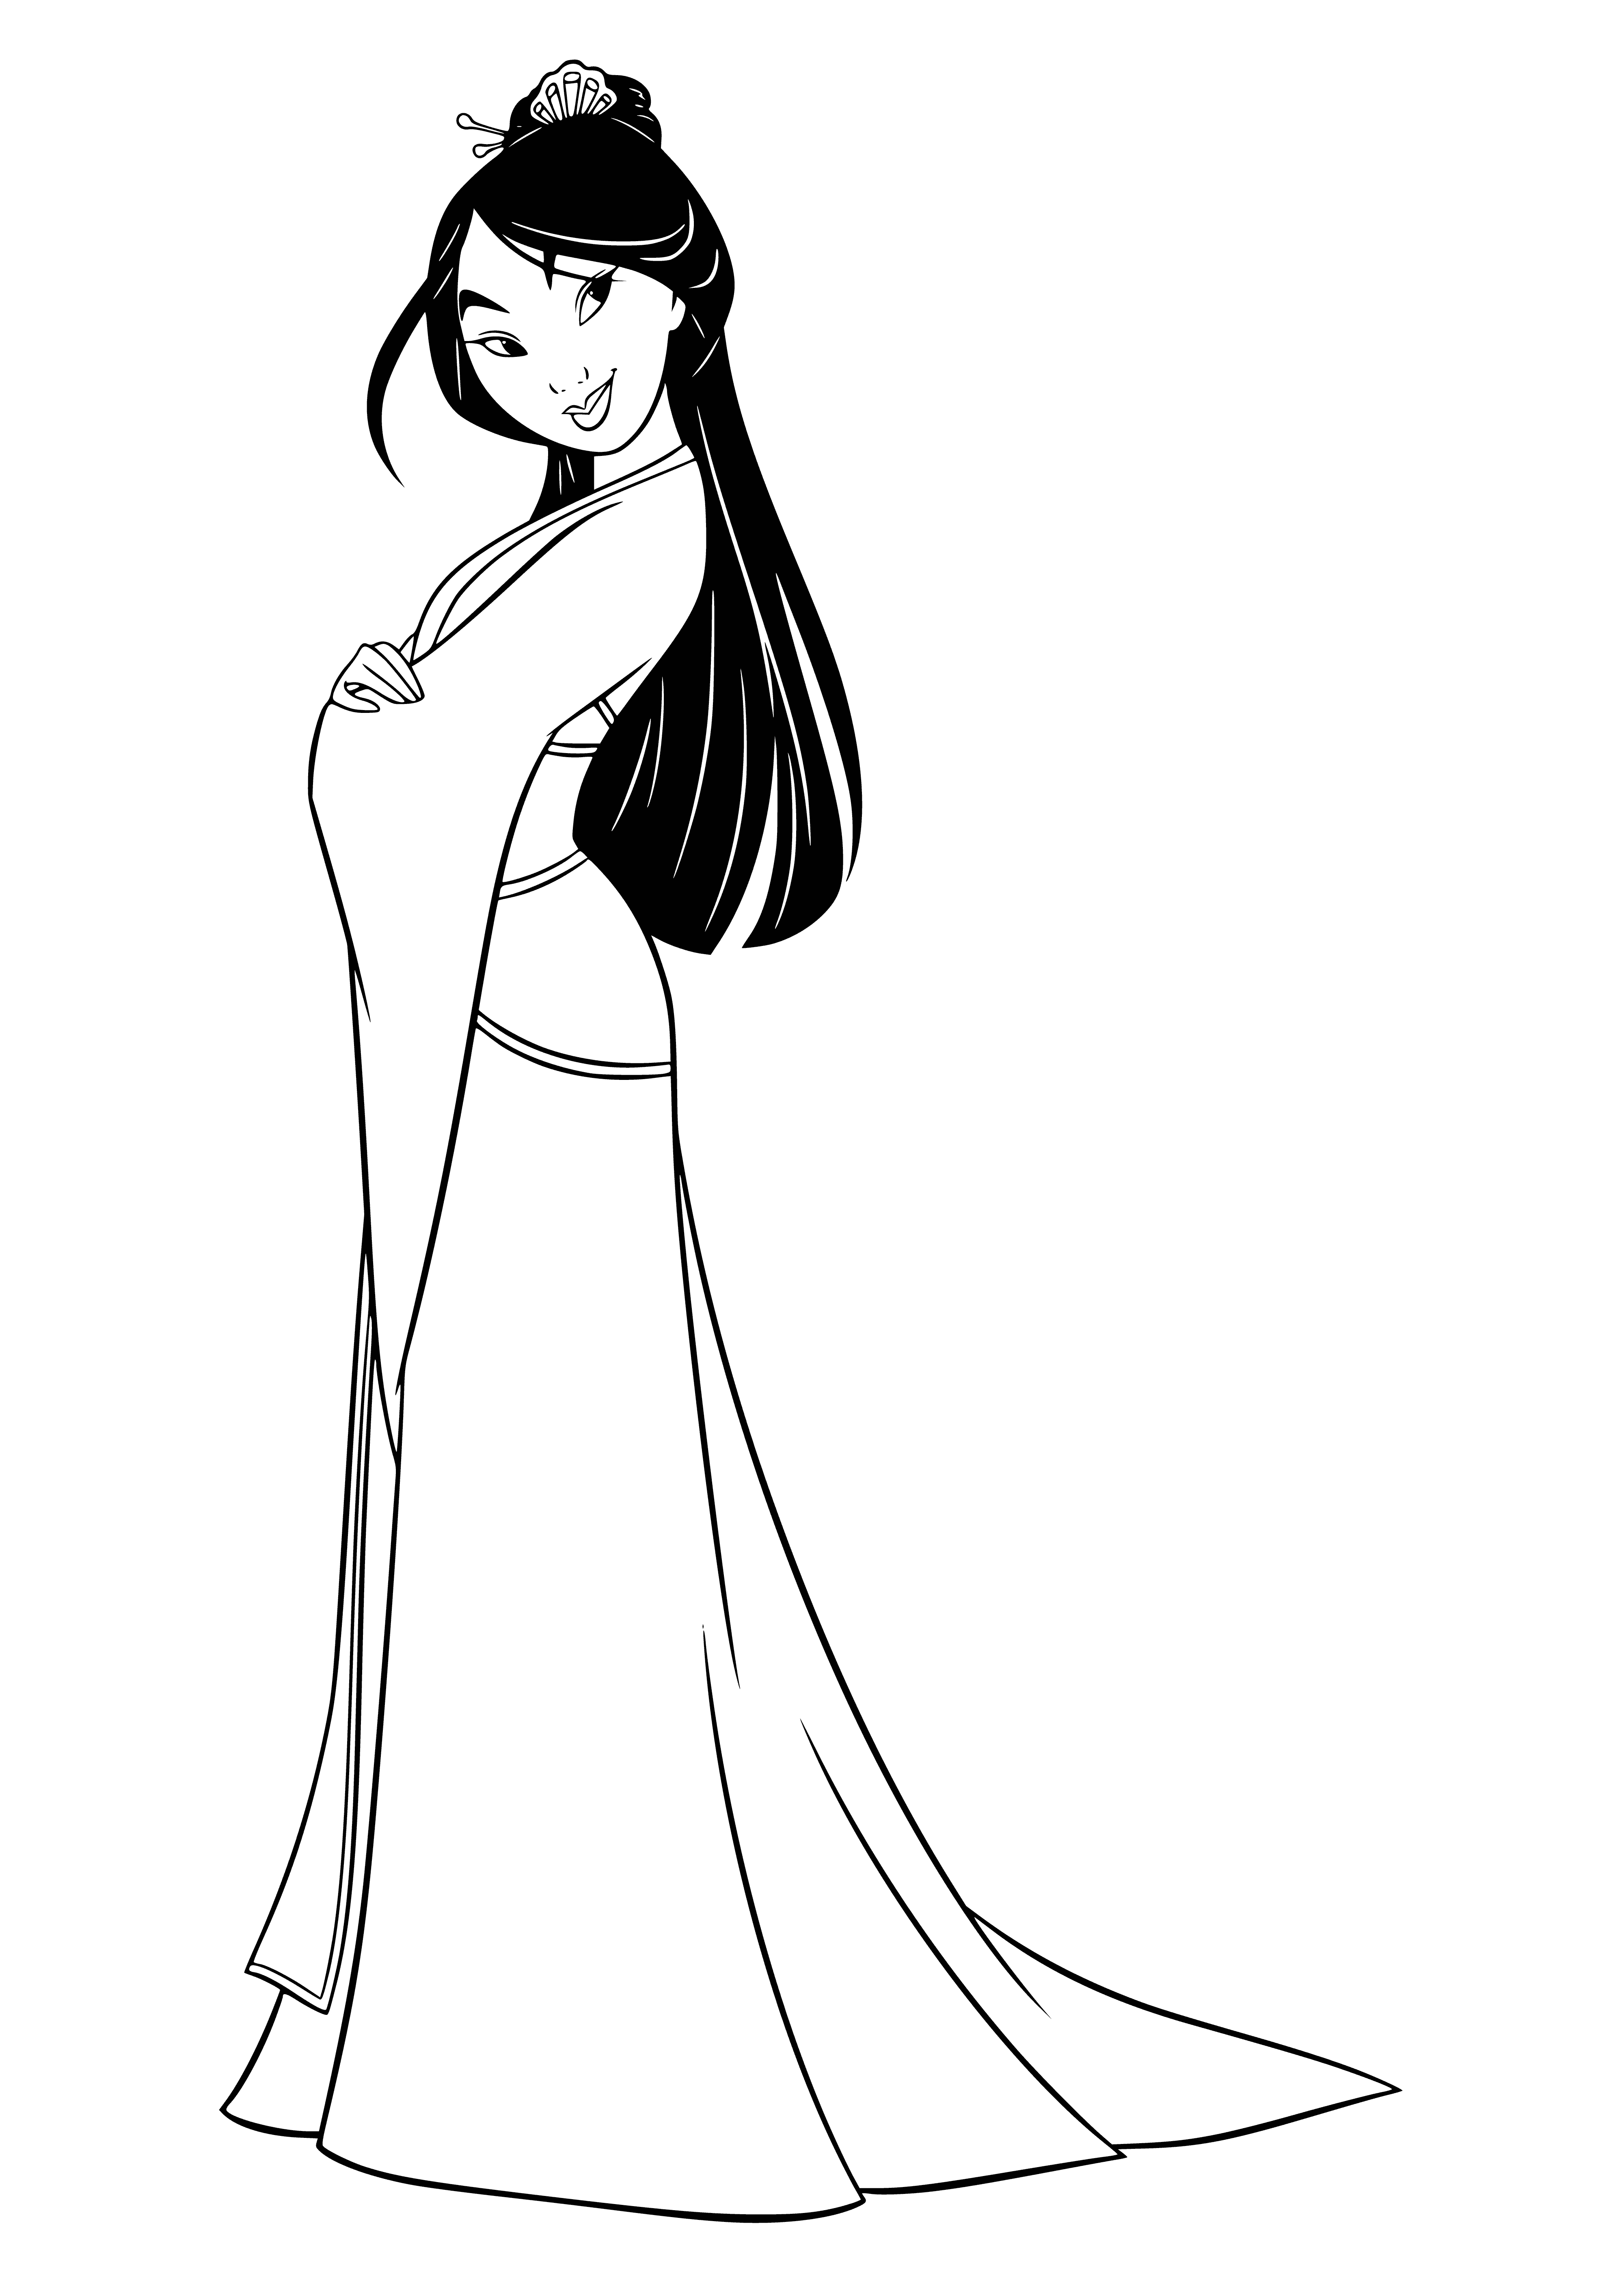 Disney Princess Mulan coloring page